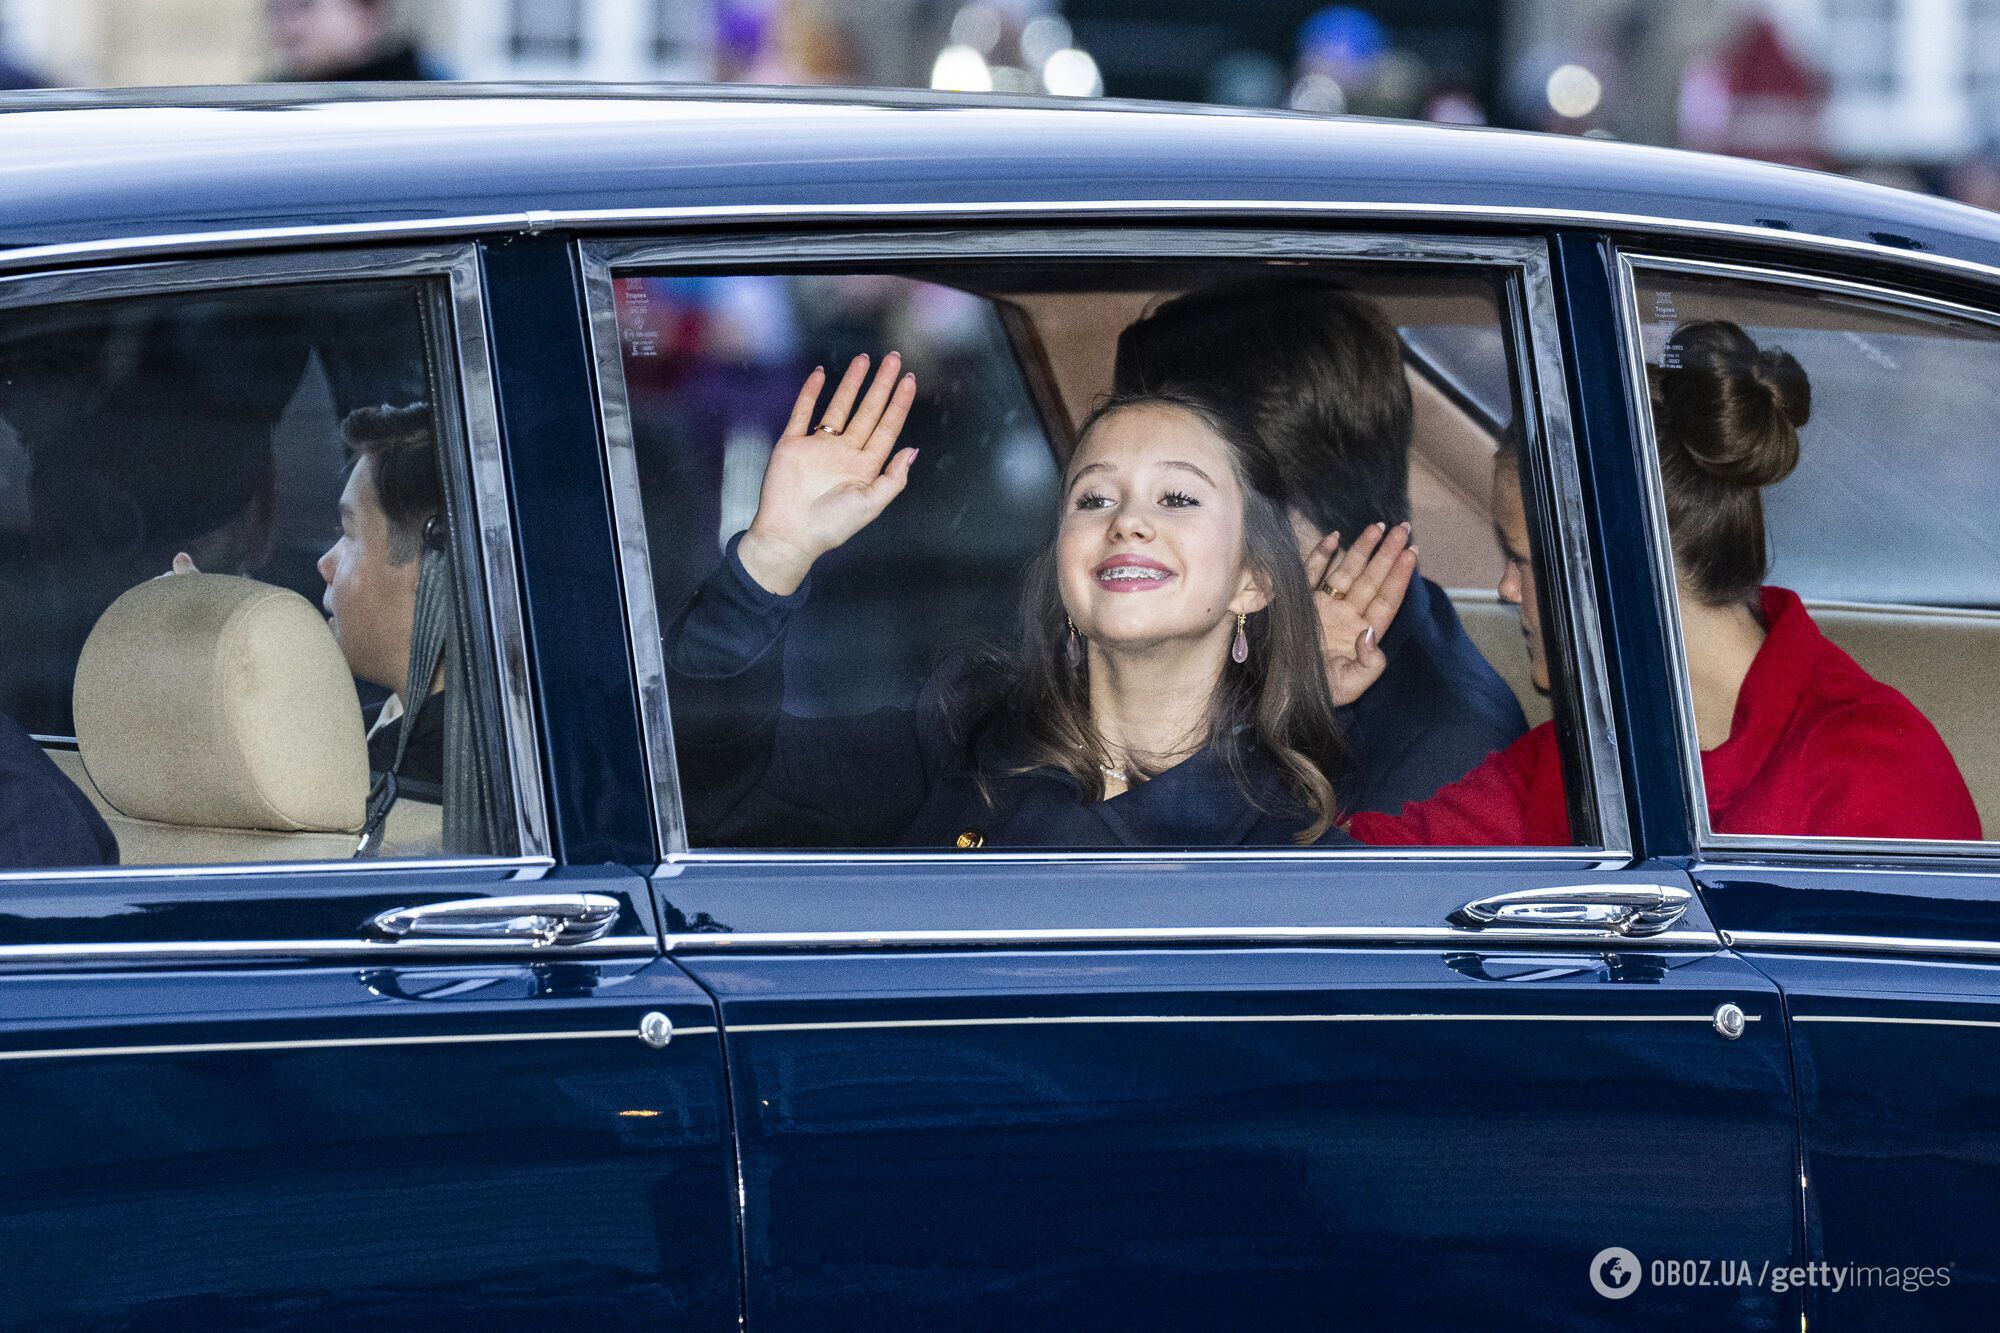 Луи в юбке. 13-летняя принцесса Жозефина украла все внимание публики на церемонии провозглашения Фредерика X королем Дании